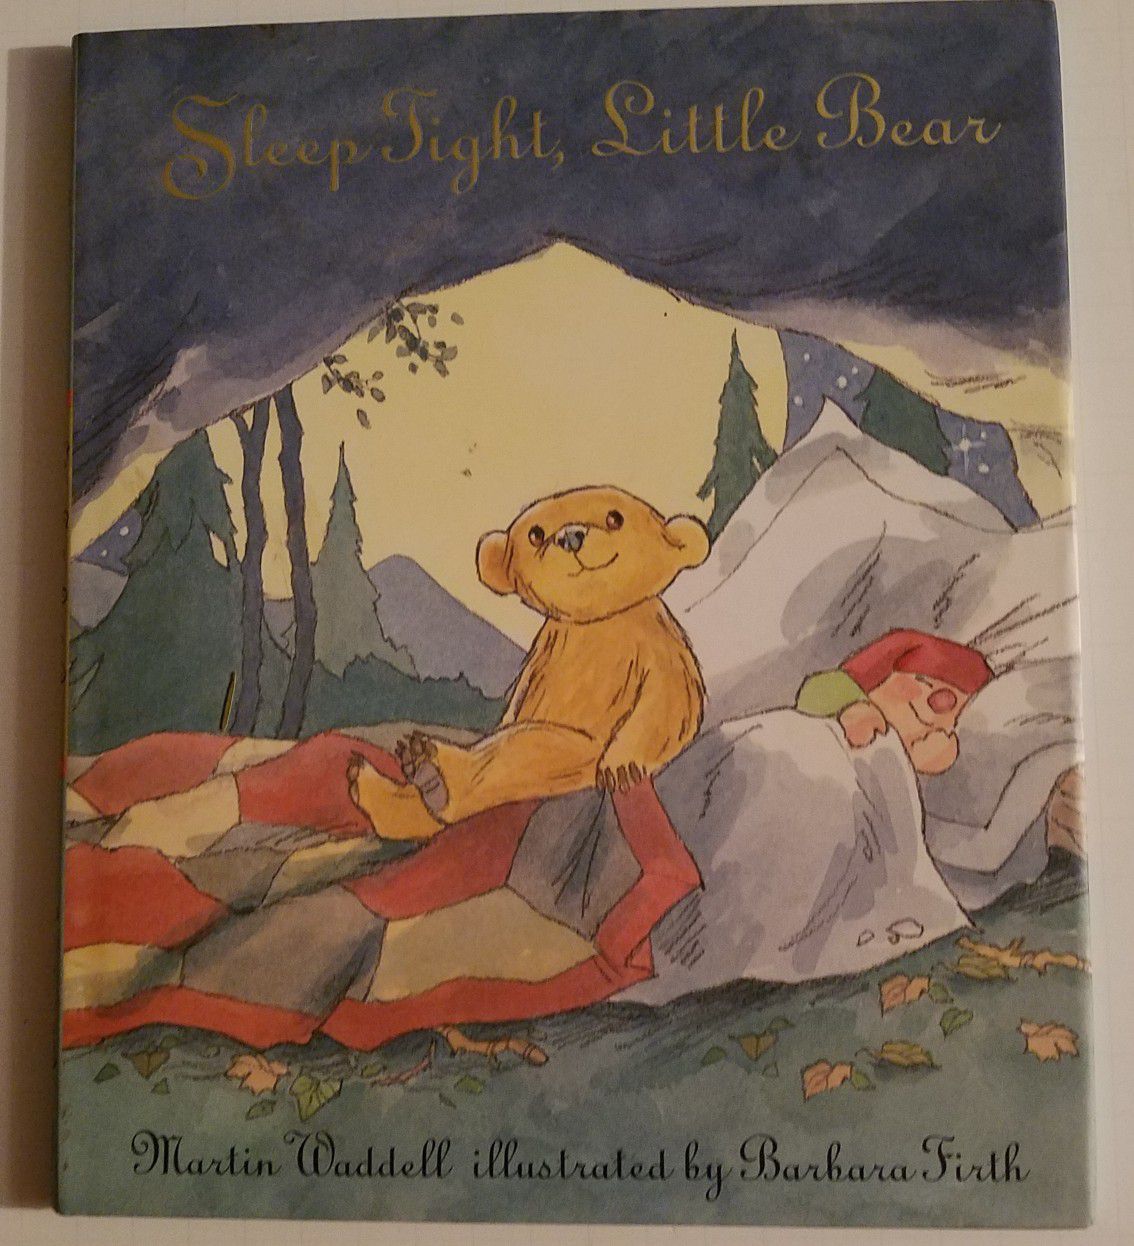 Sleep tight little bear hardcover book